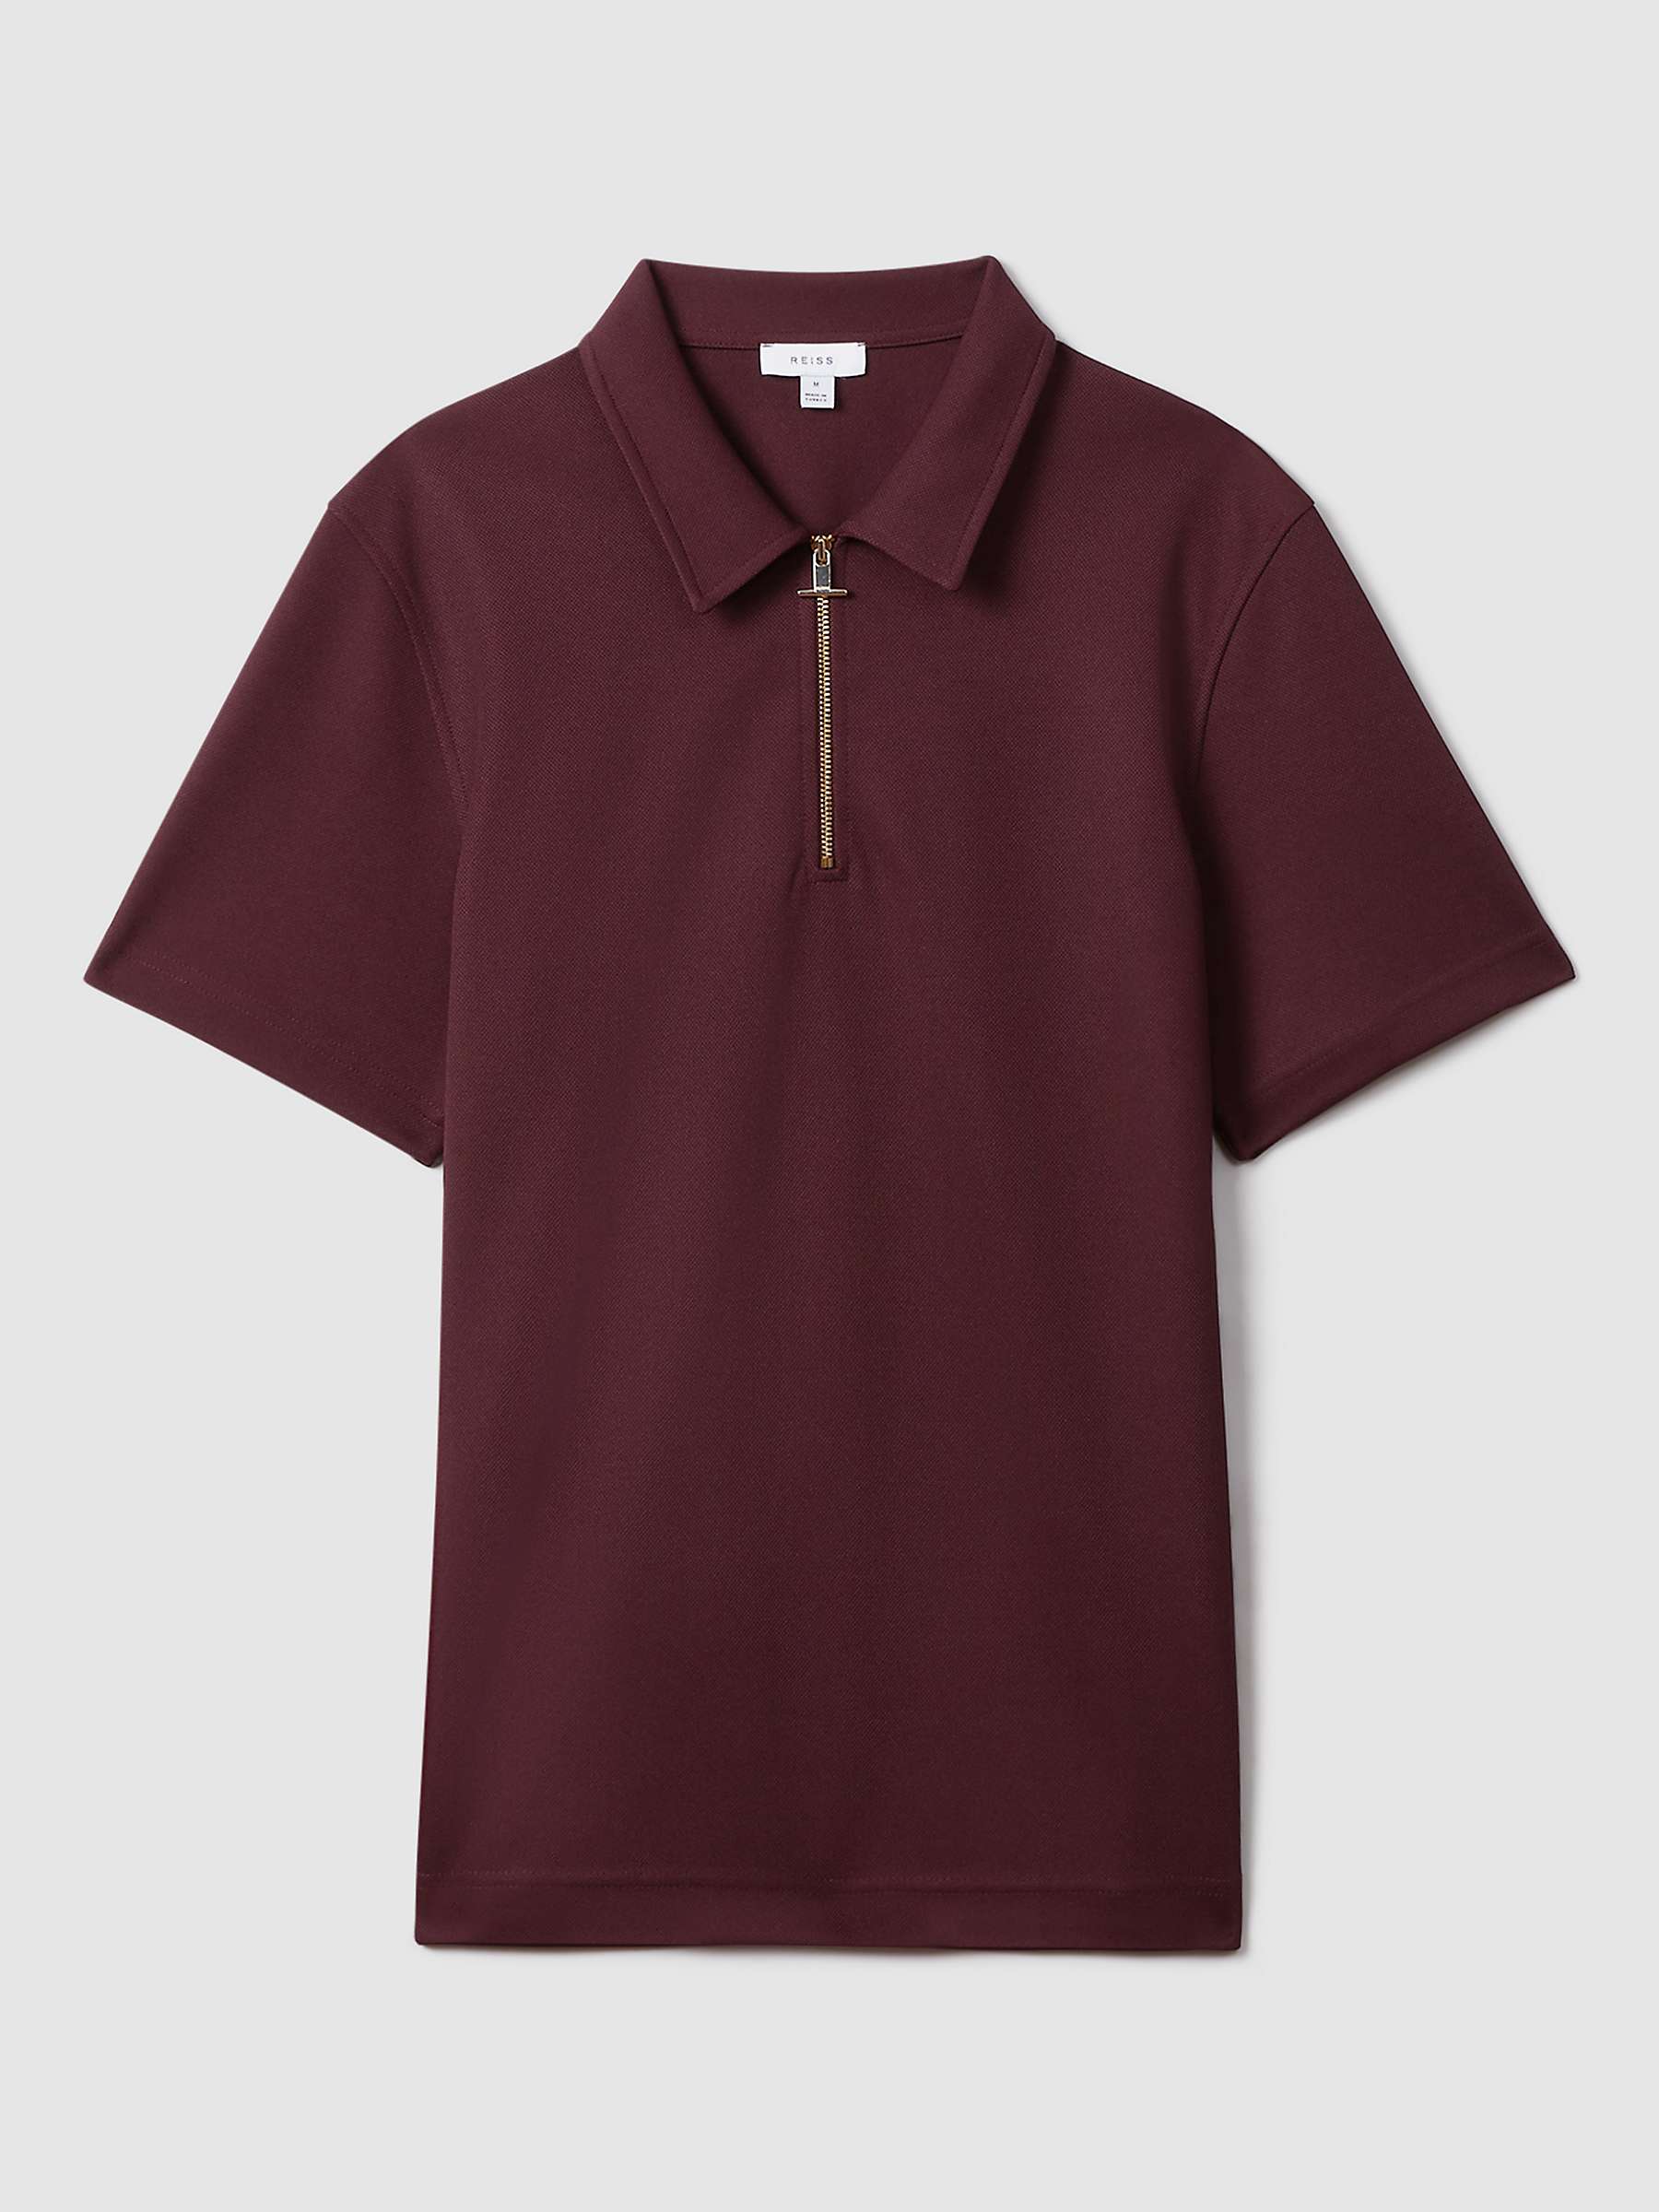 Buy Reiss Floyd Half Zip Textured Polo Shirt Online at johnlewis.com